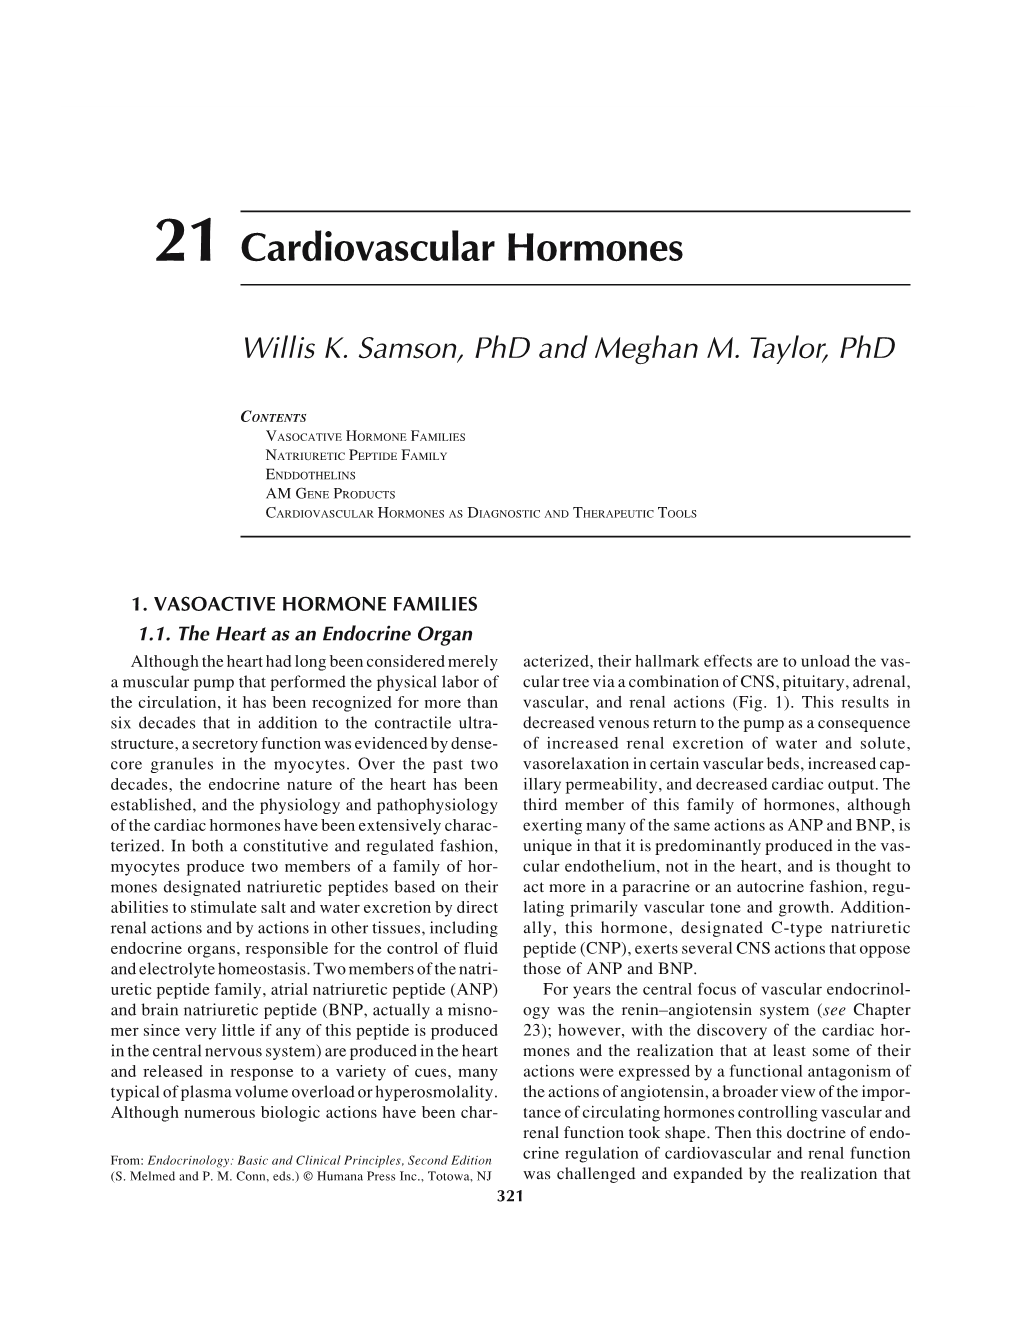 Cardiovascular Hormones 321